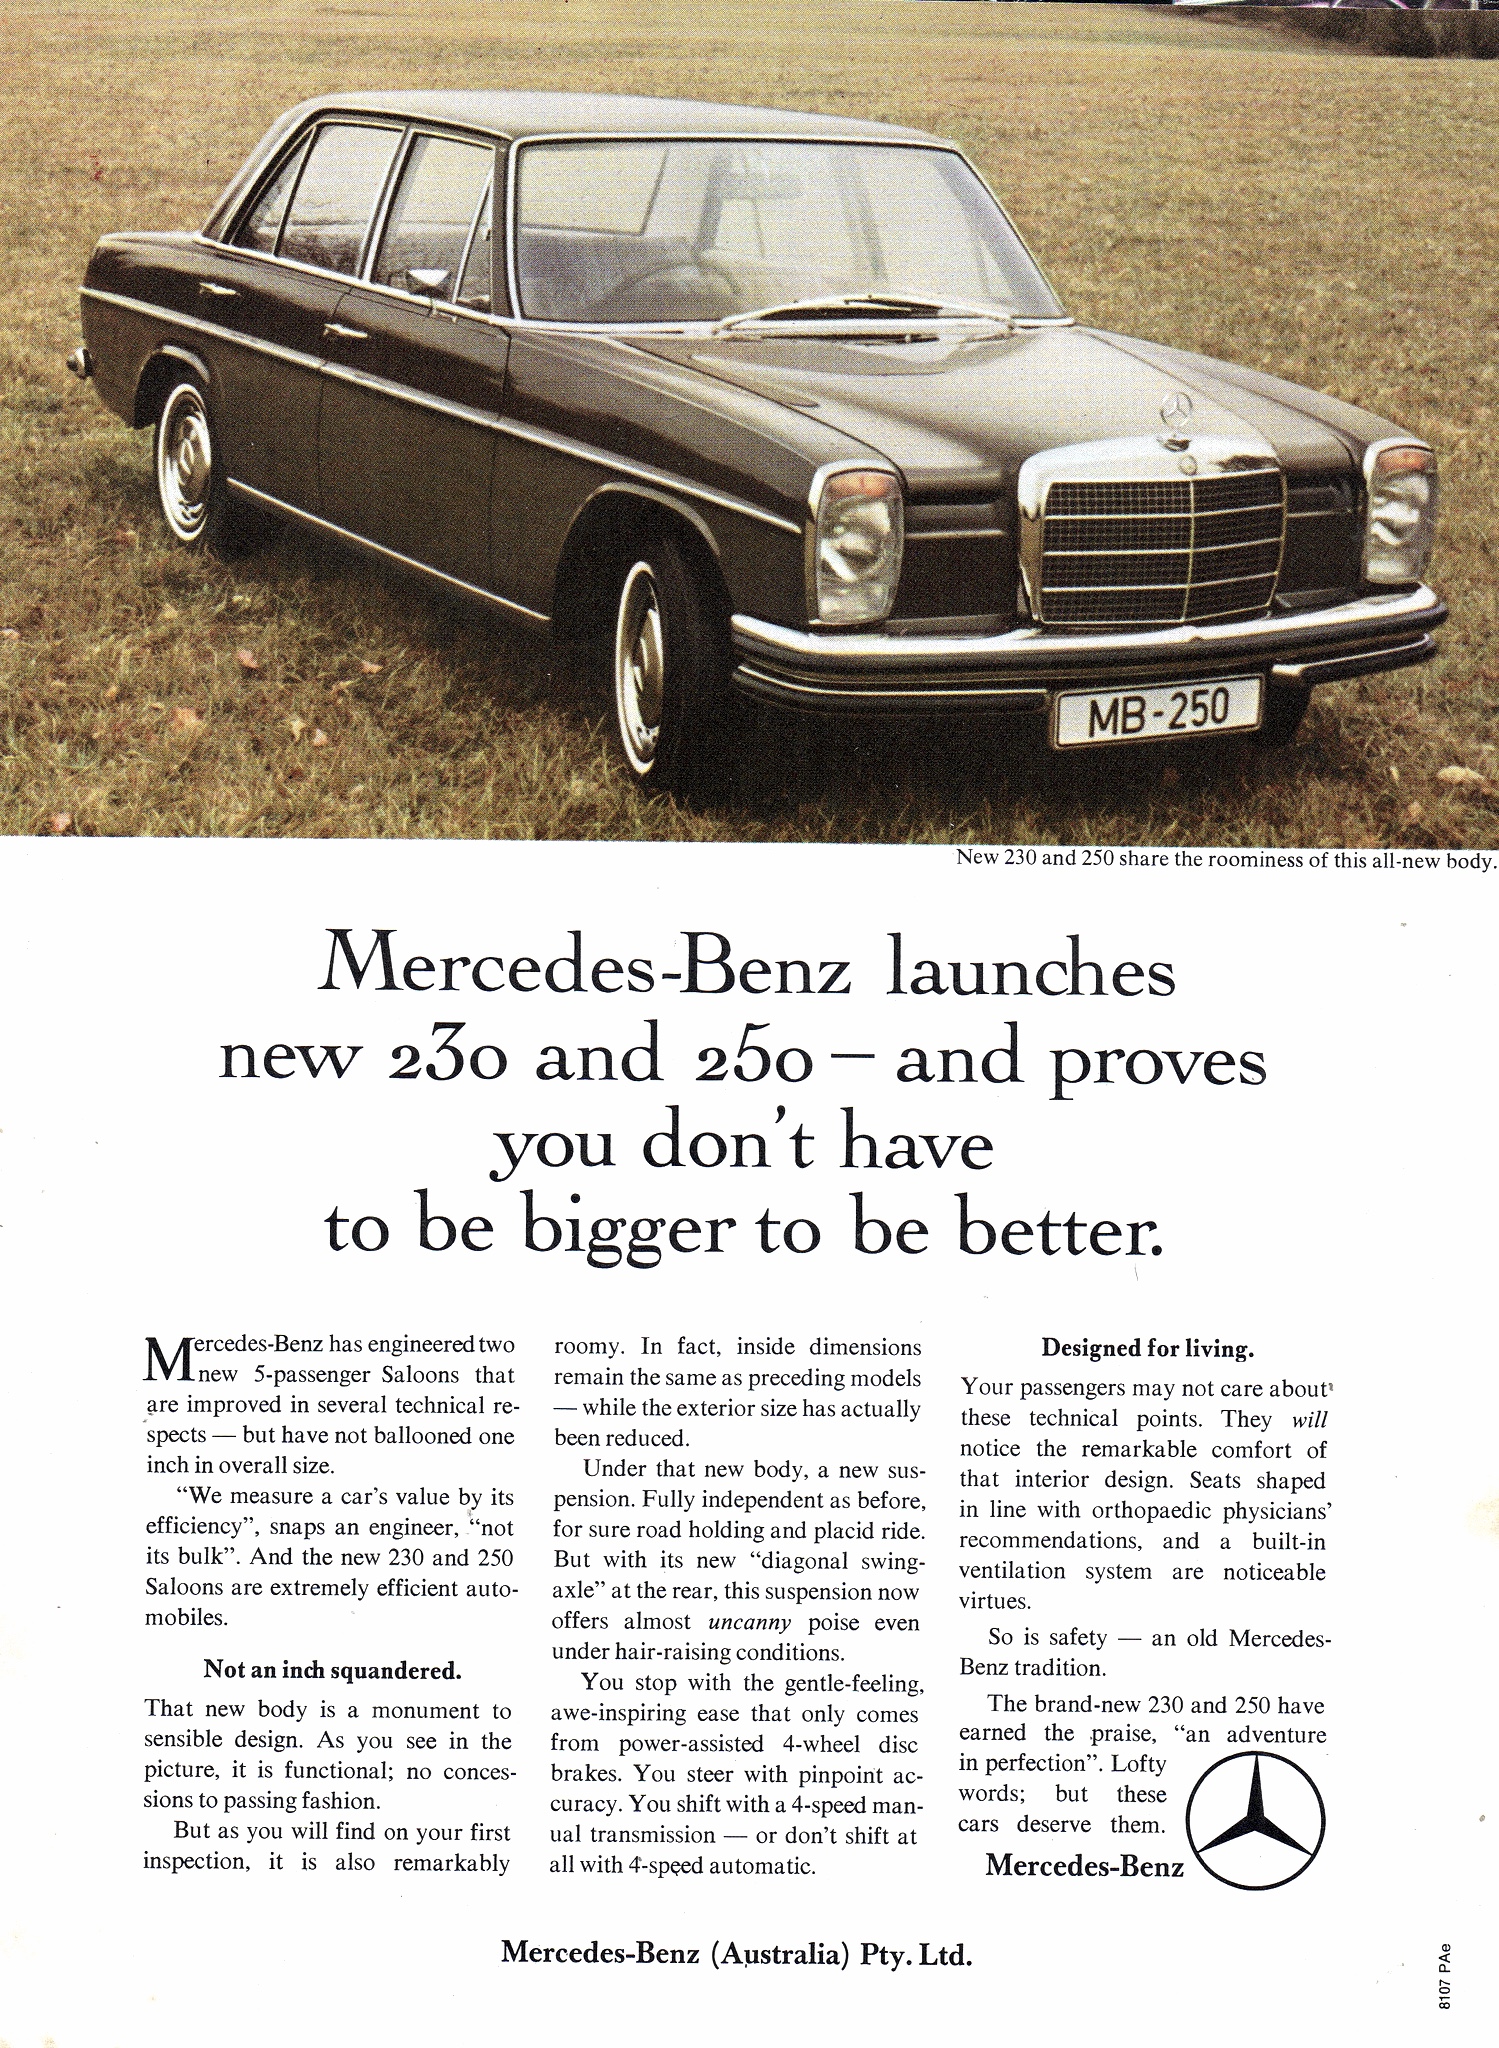 1968 Mercedes-Benz 230 & 250 Compact Sedan